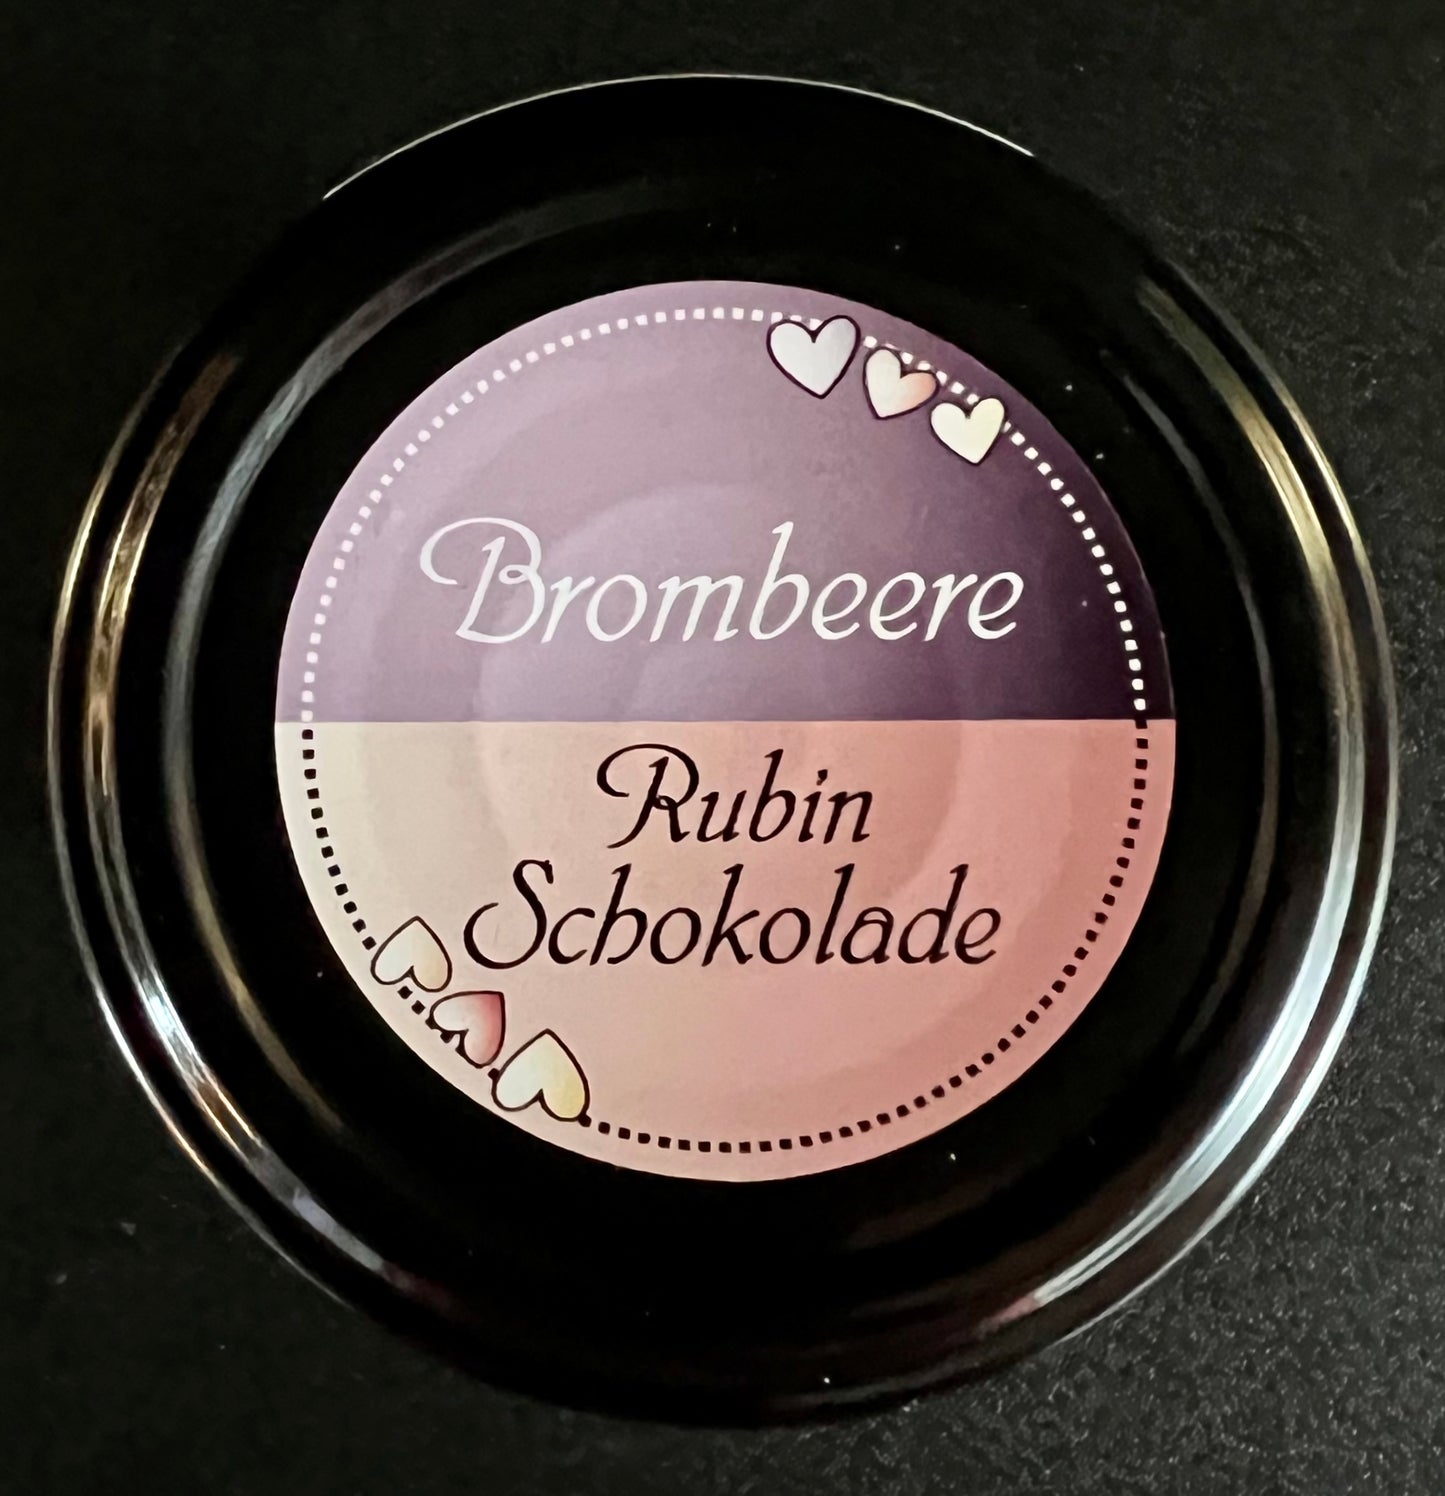 Brombeere - Rubin Schokolade